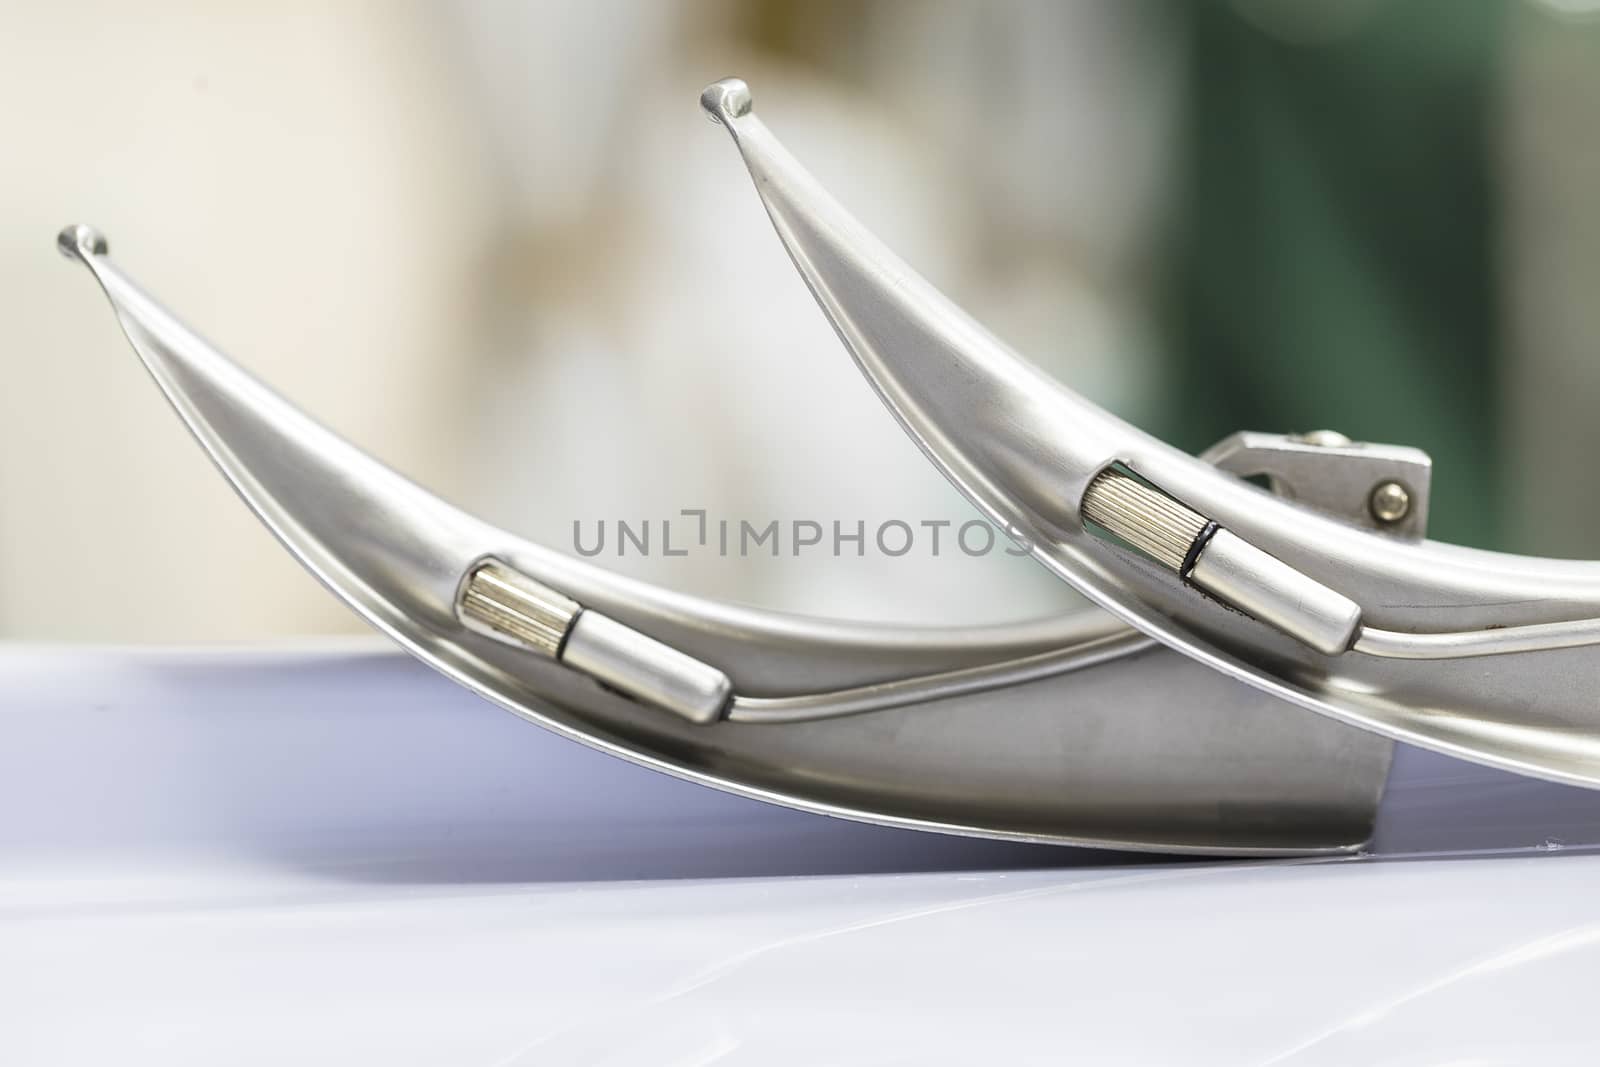 two shiny metal laryngoscope blades on a metal table top